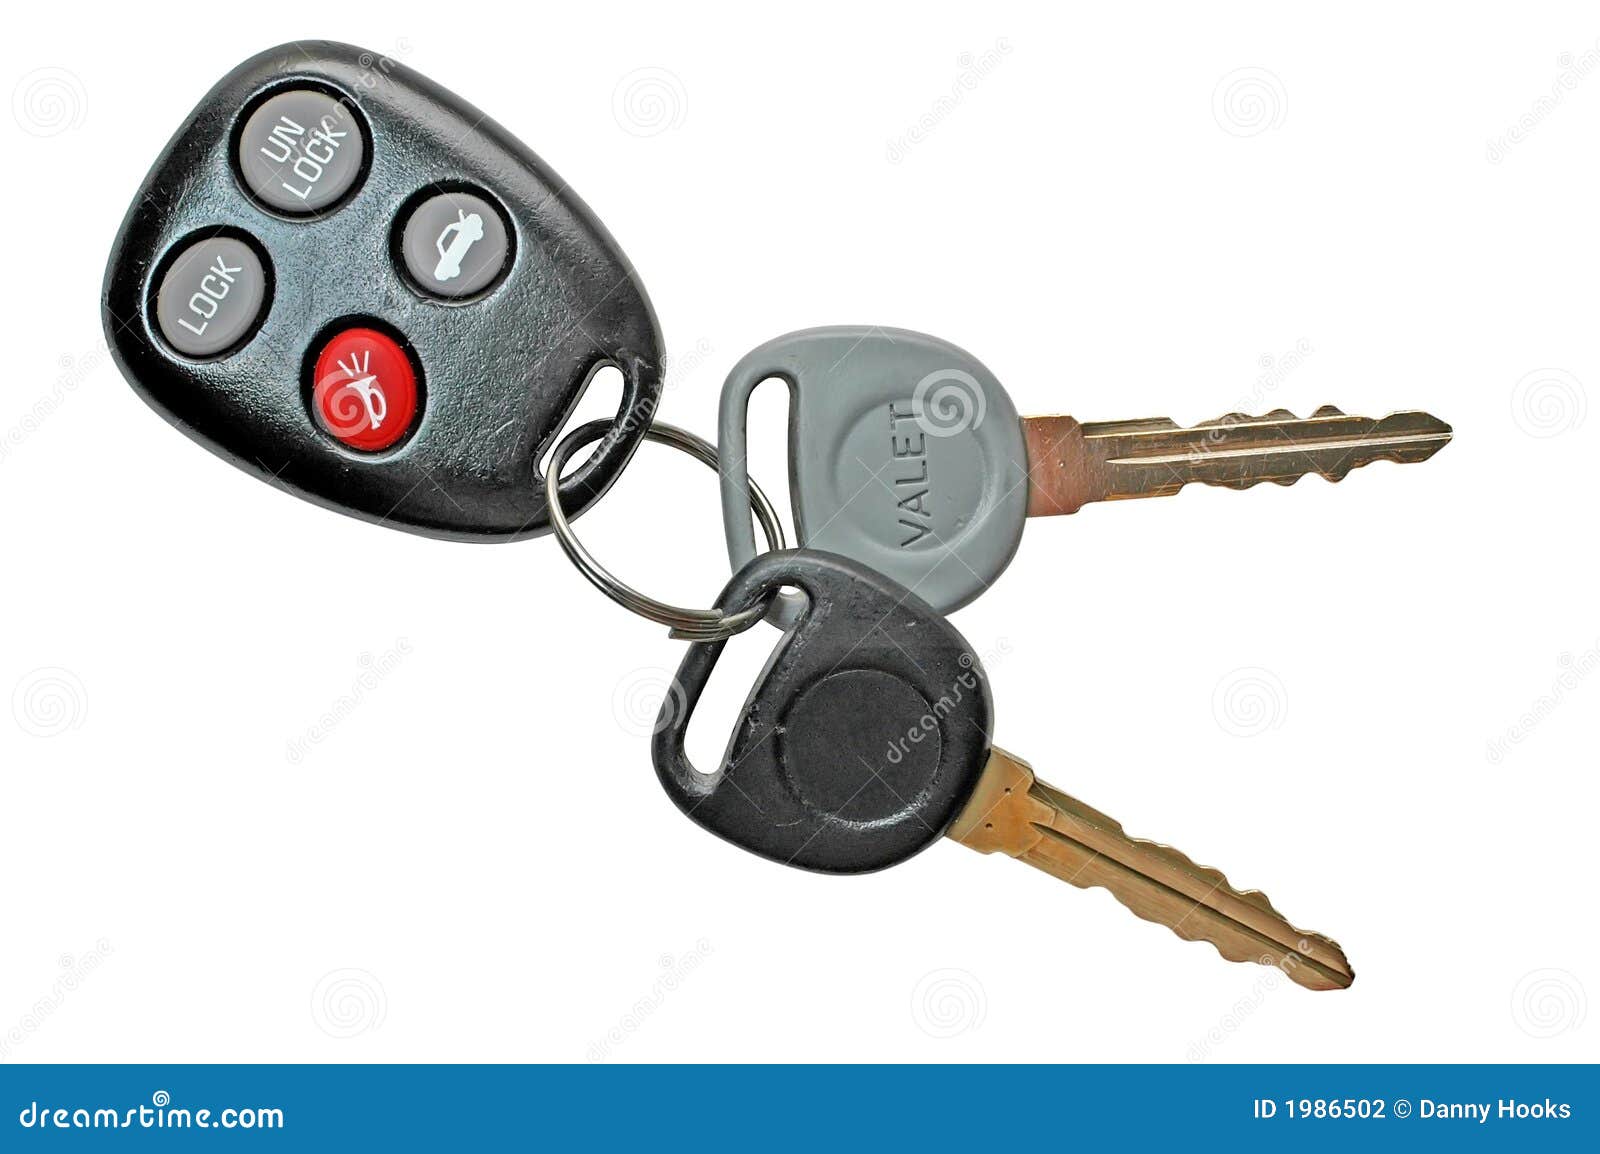 car keys clipart - photo #50